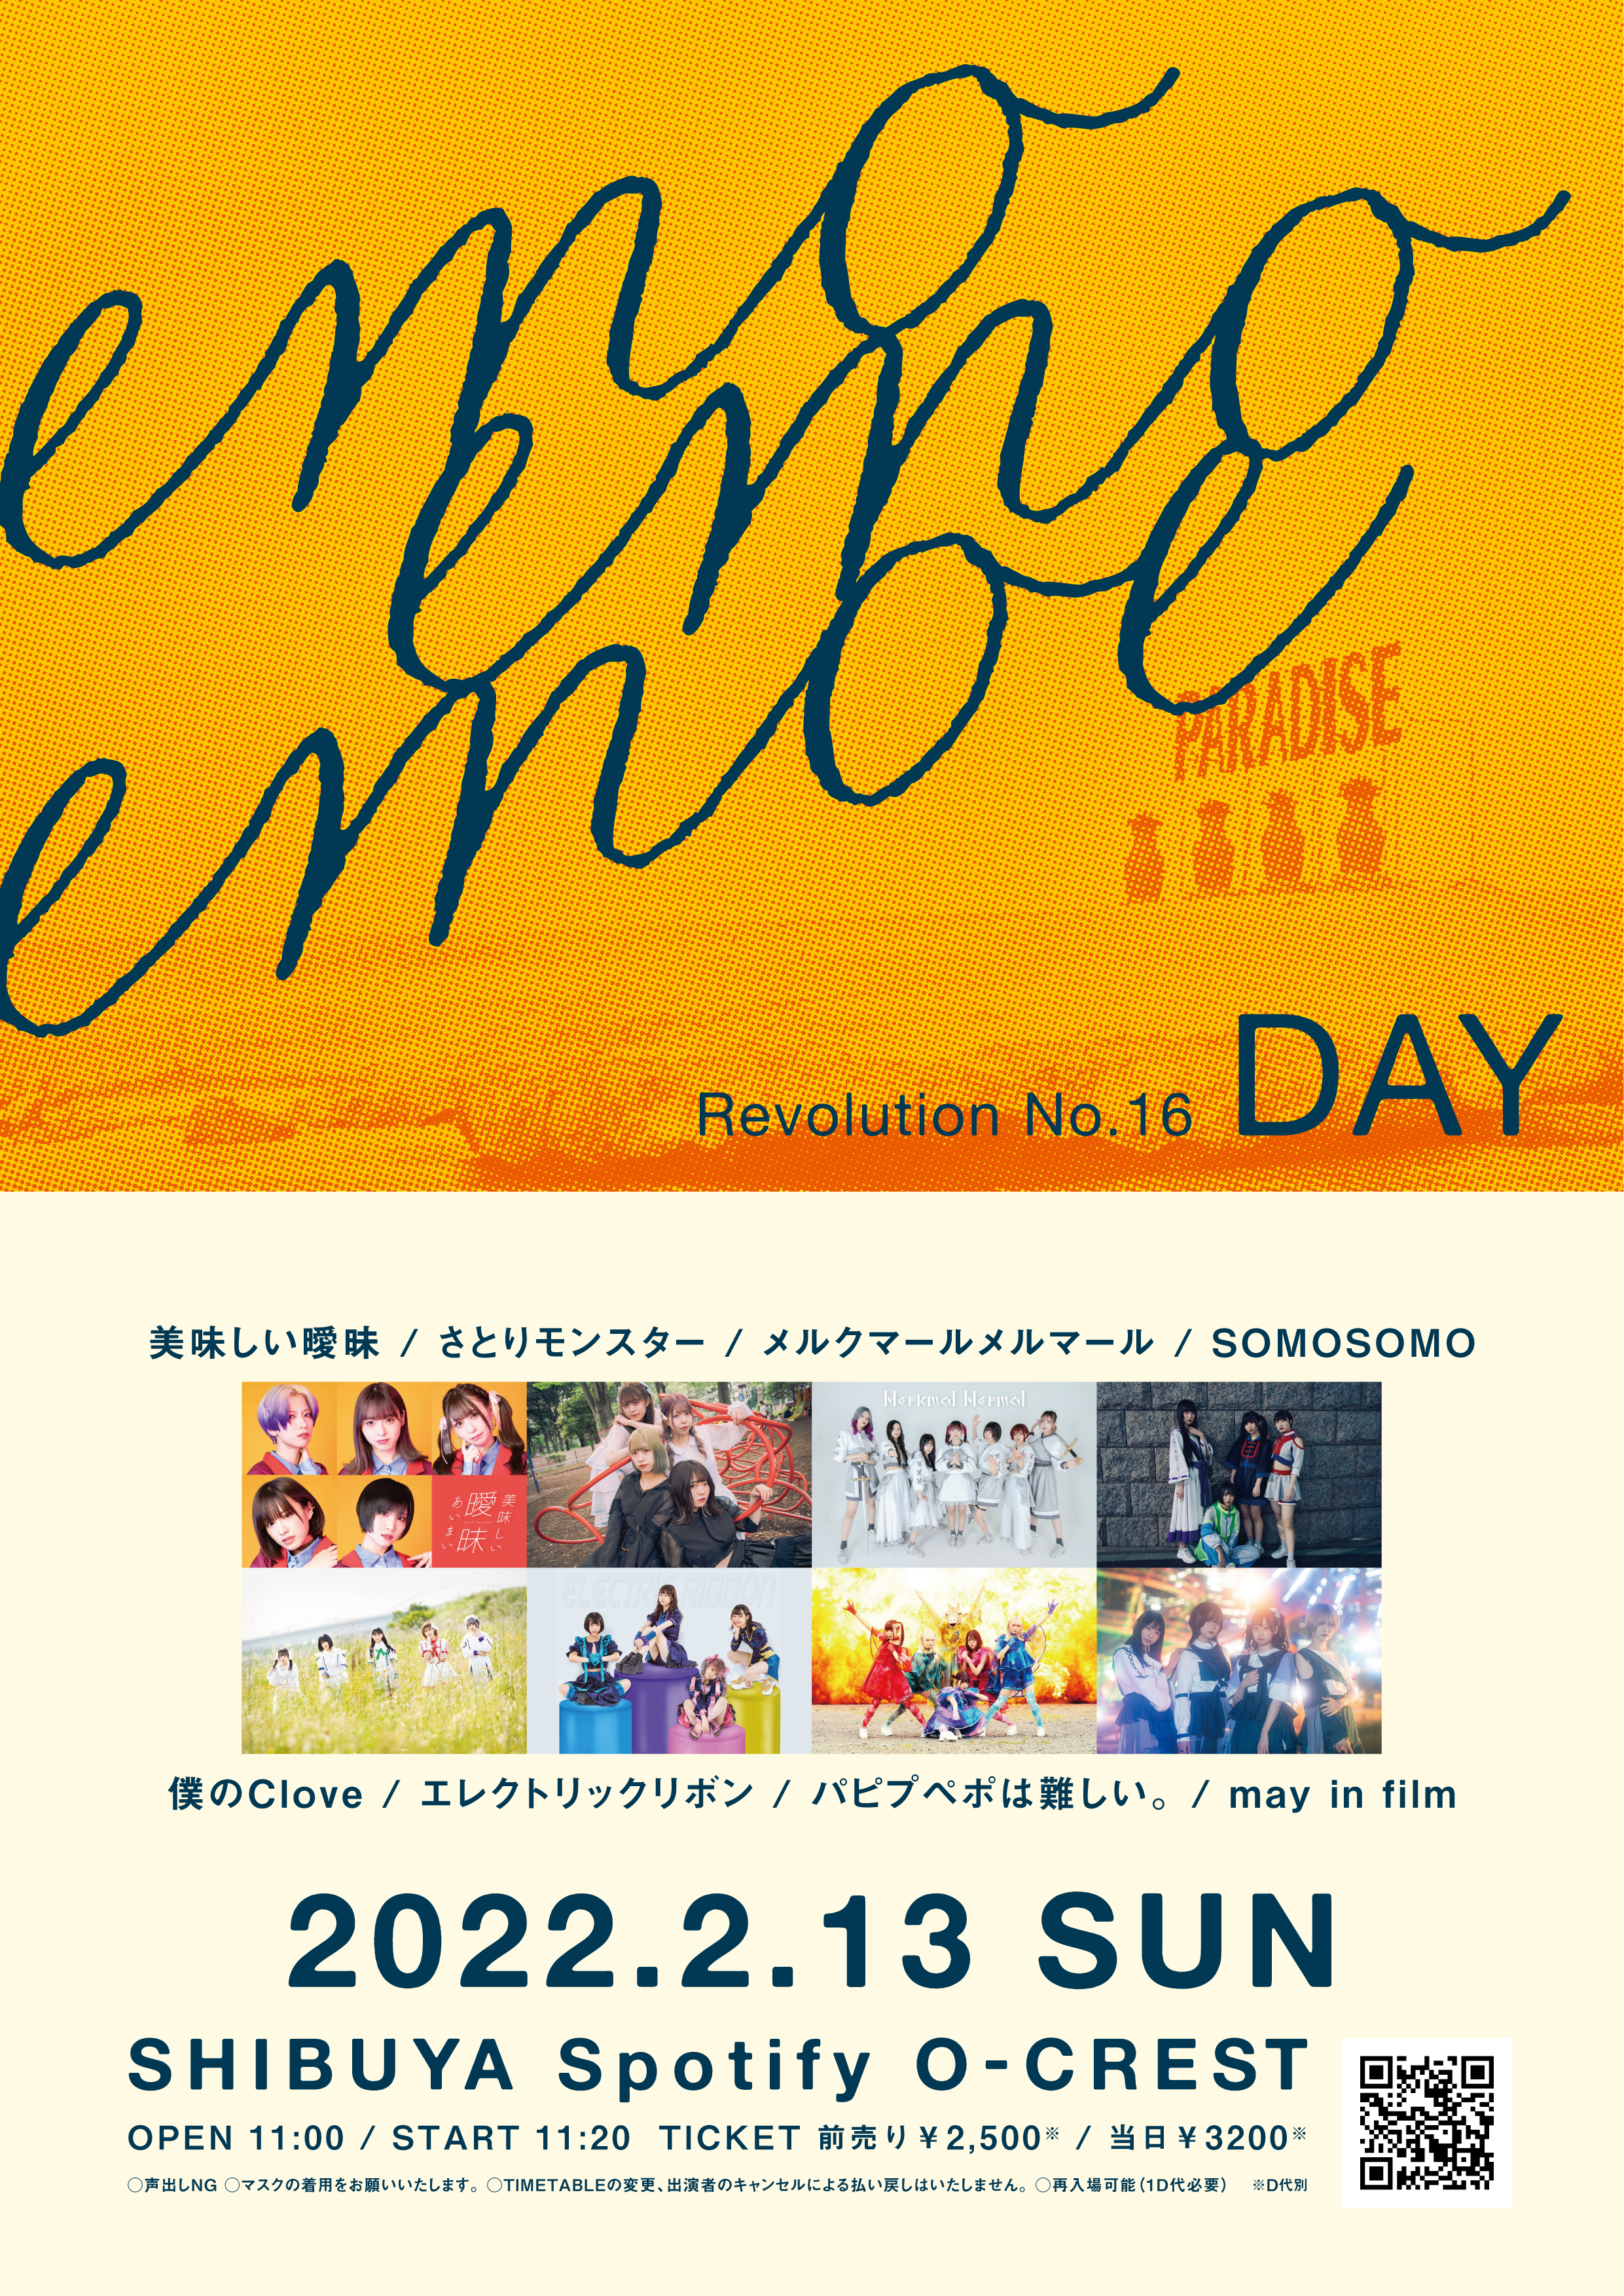 『emoemoemoe』 REVOLUTION No. 16 (DAY)